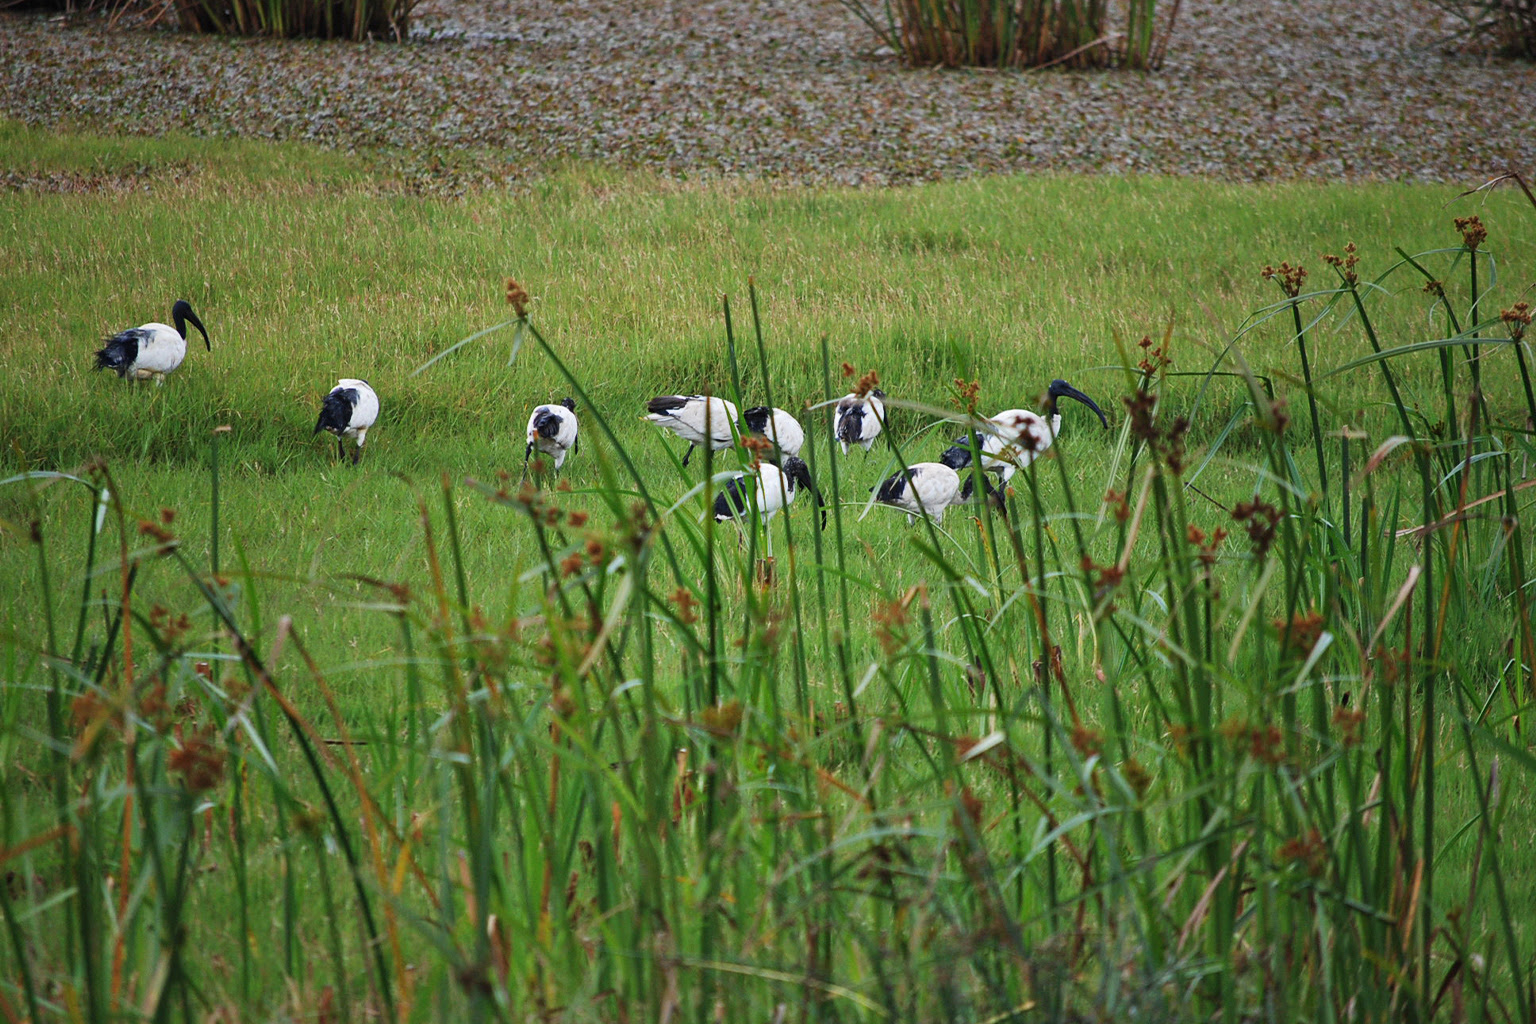 Black-headed ibises (Threskiornis melanocephalus) at a grassy section of Manguo wetland in 2009.